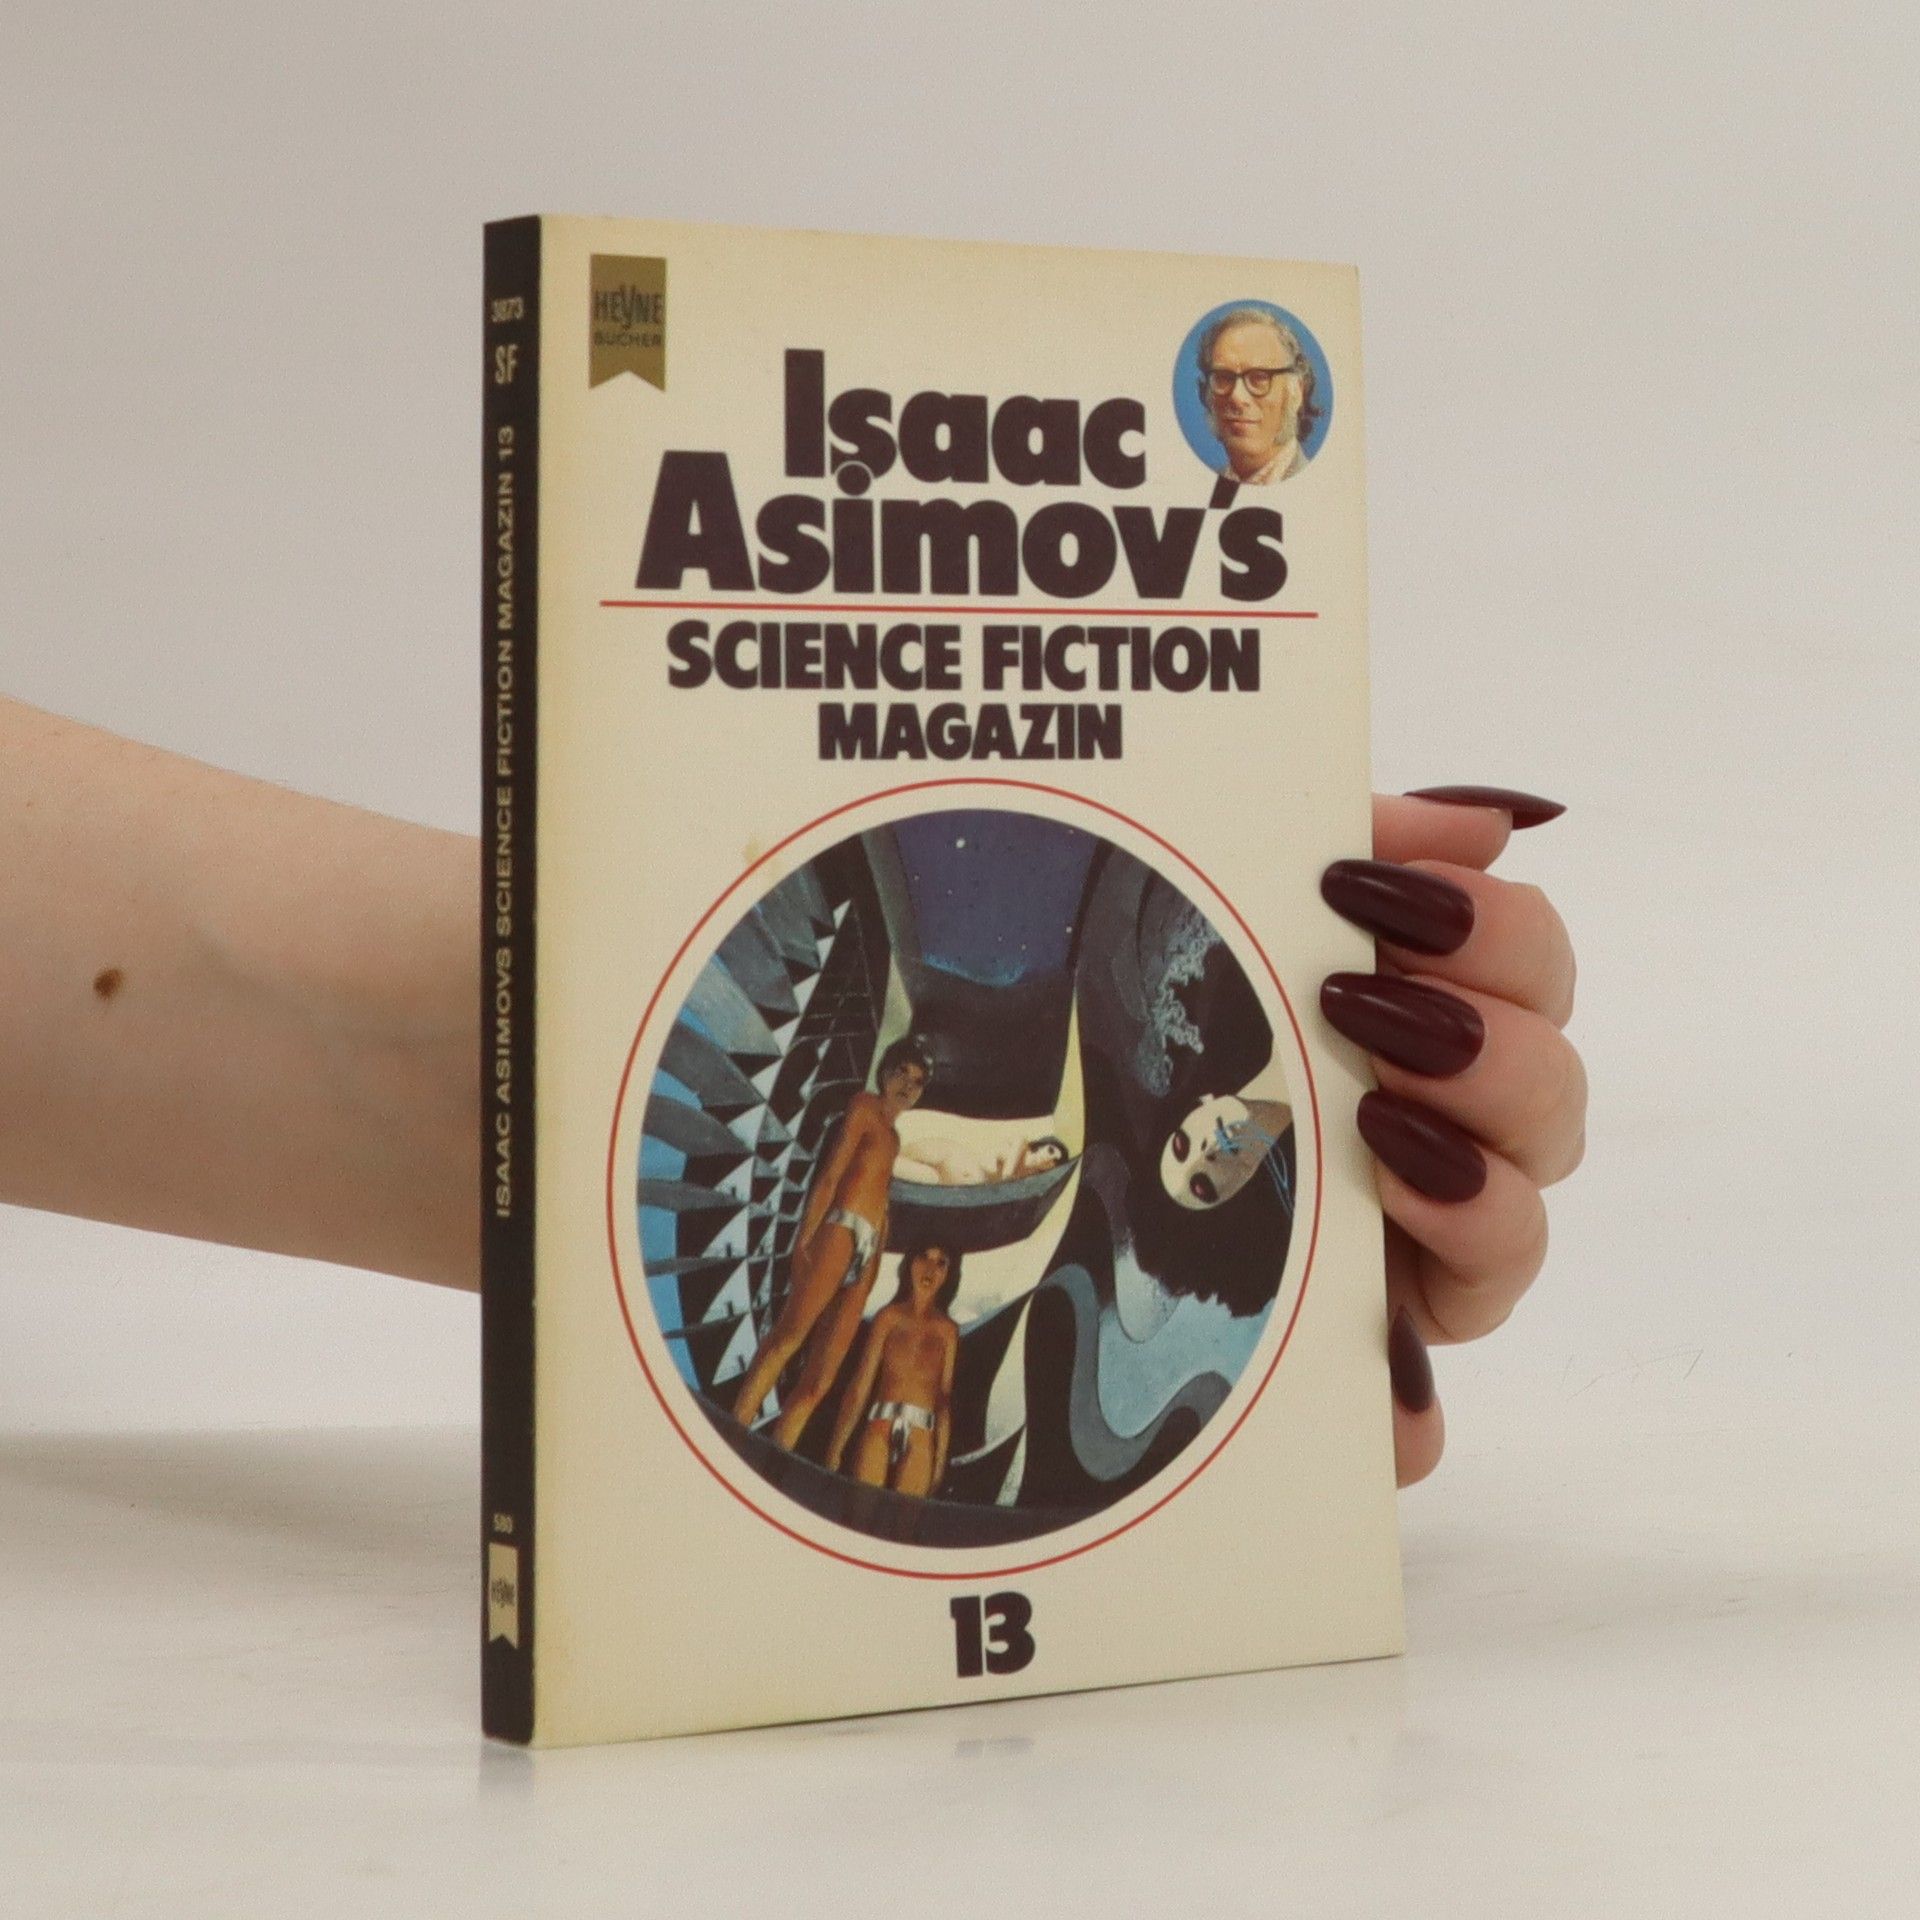 Isaac Asimov's Science Fiction Magazin 13 - Isaac Asimov